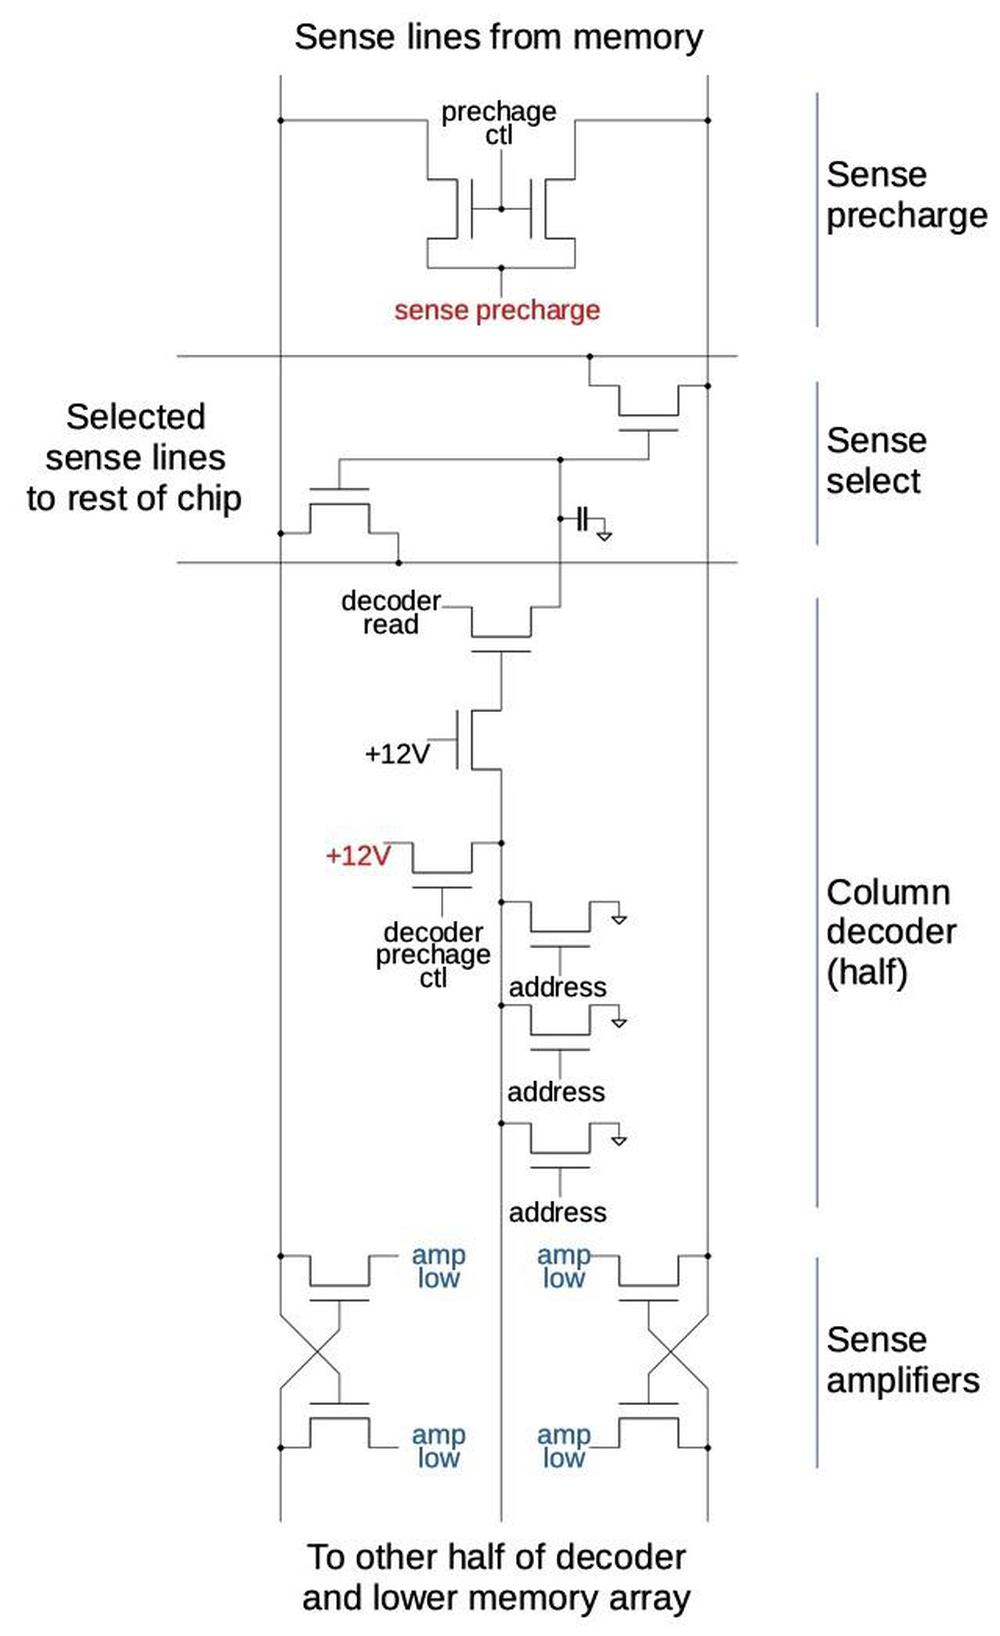 Schematic of half the column decoder and sense amplifier.